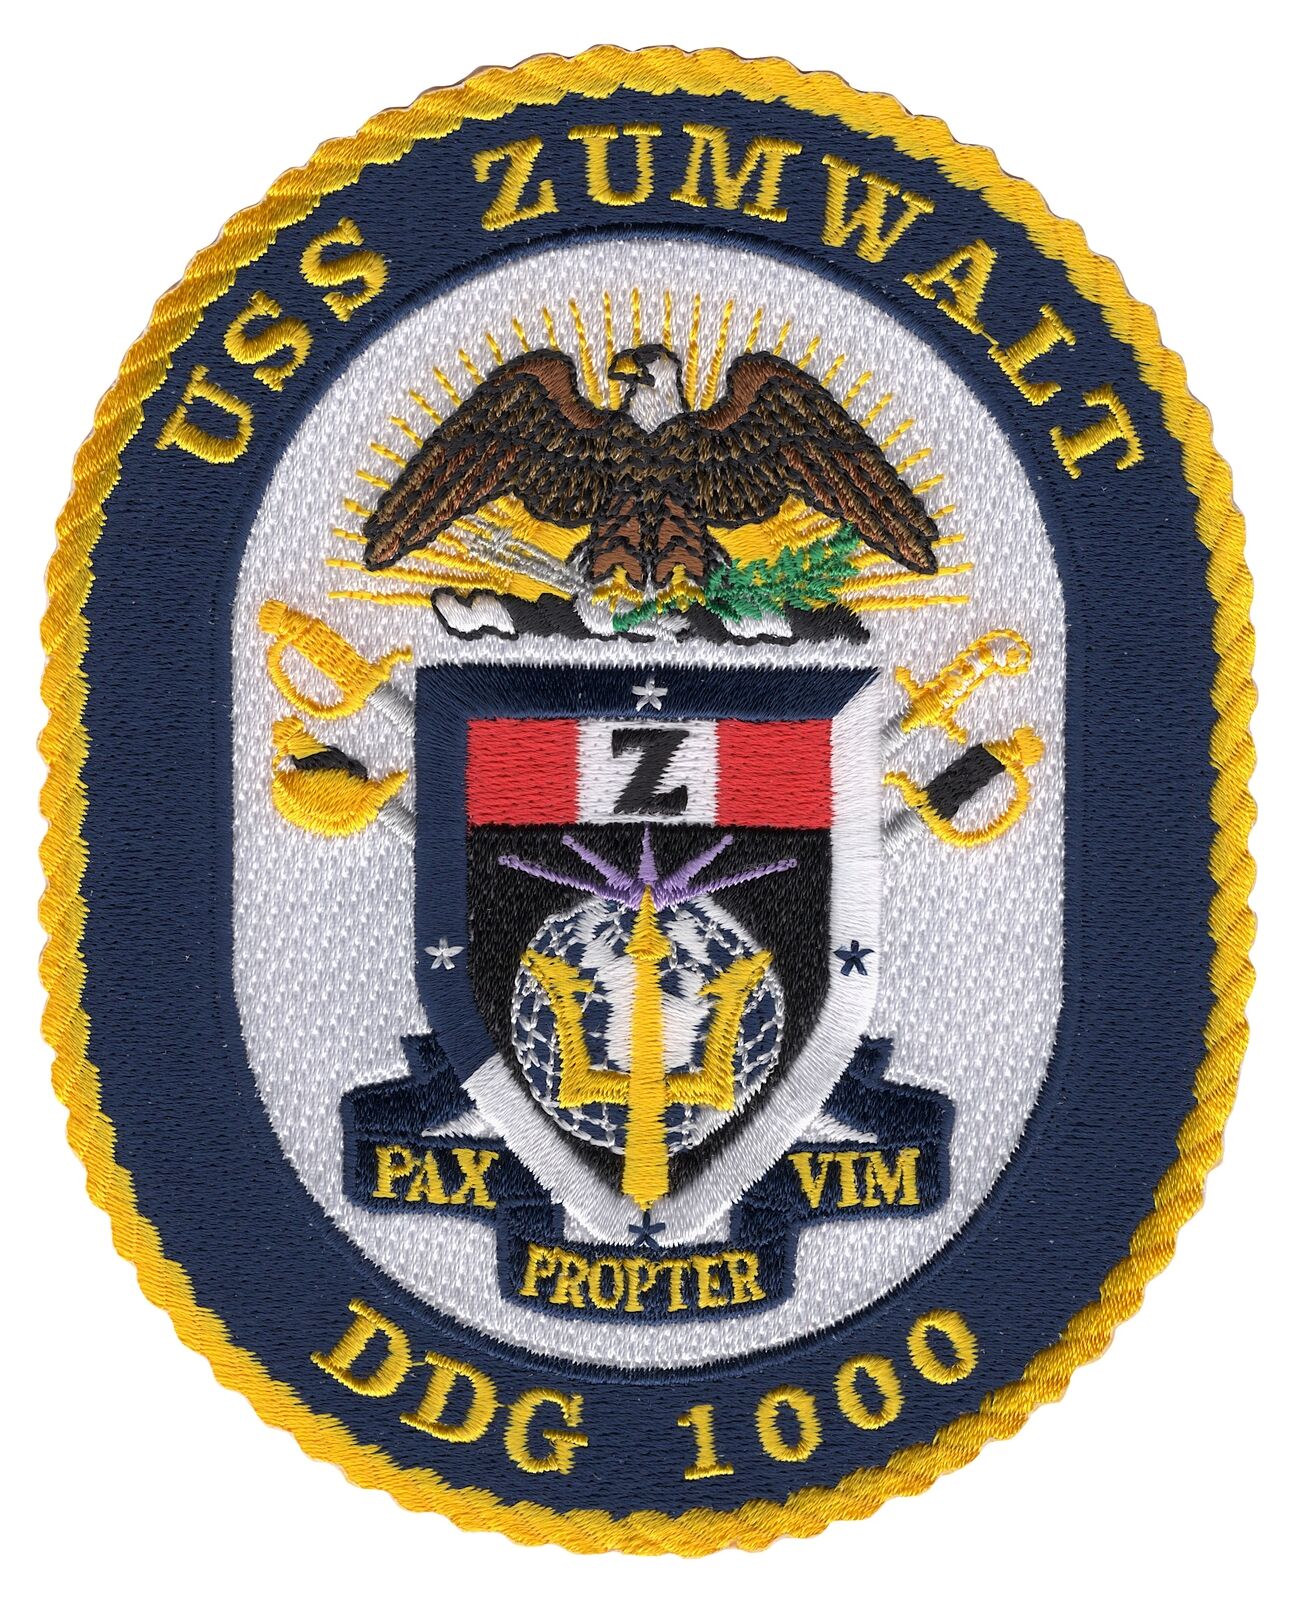 DDG-1000 USS Zumwalt Patch